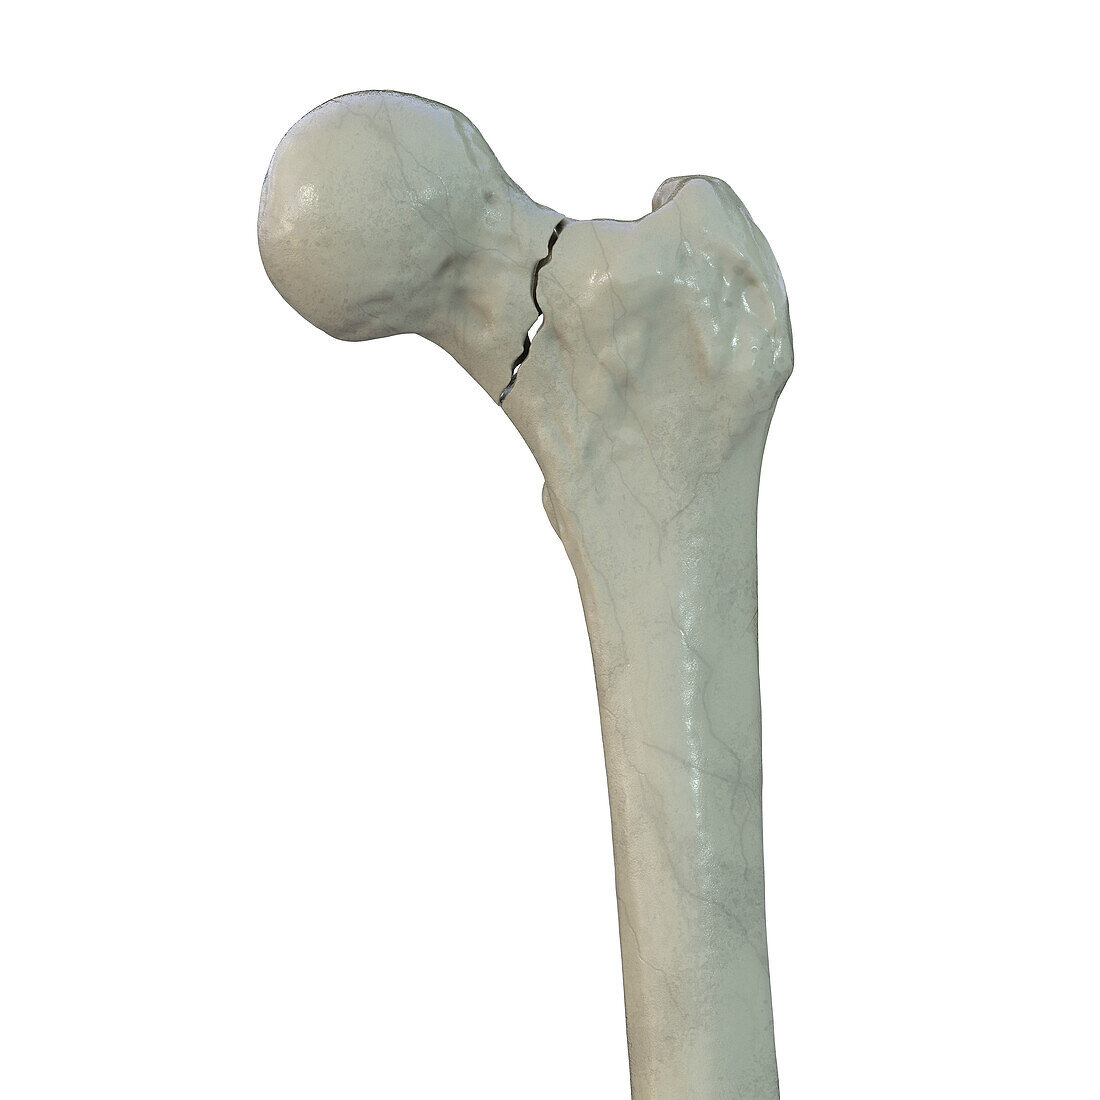 Fracture of the femur neck, illustration